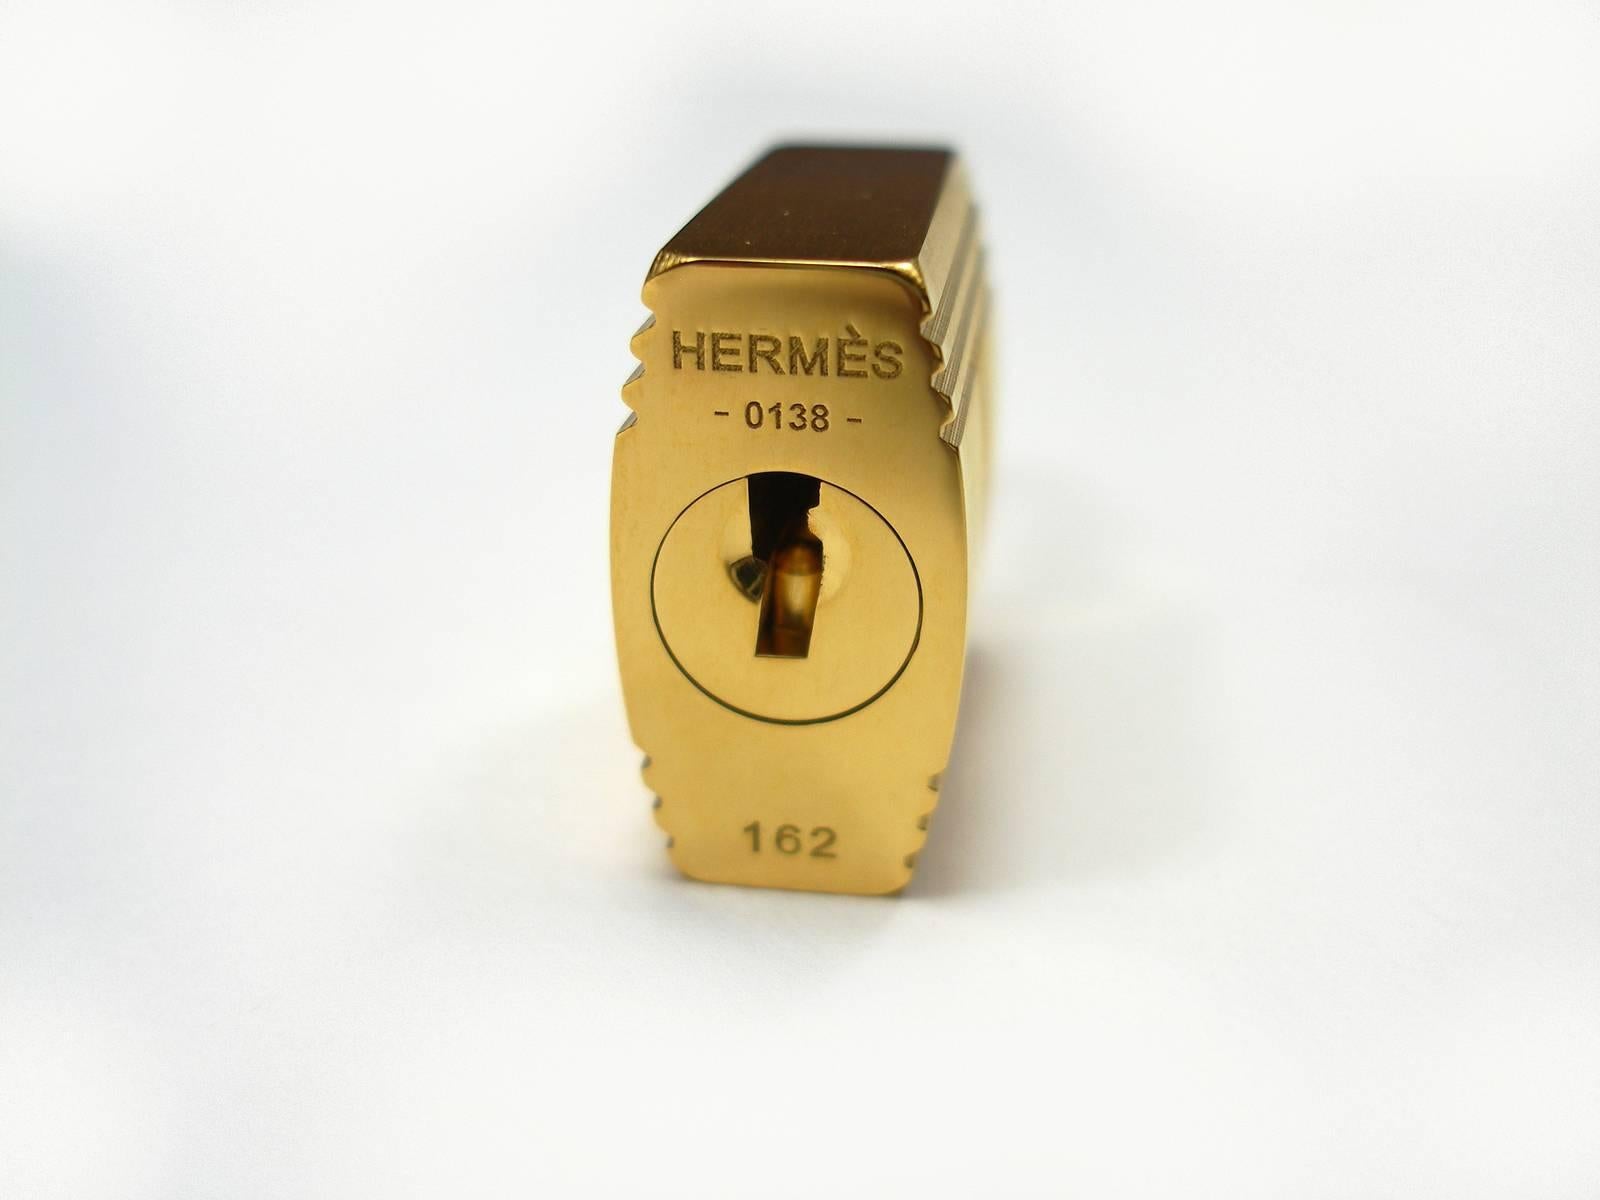 Hermès Cadenas Lock 2 Keys For Birkin or Kelly bag Gold plated shiny and brushed 7